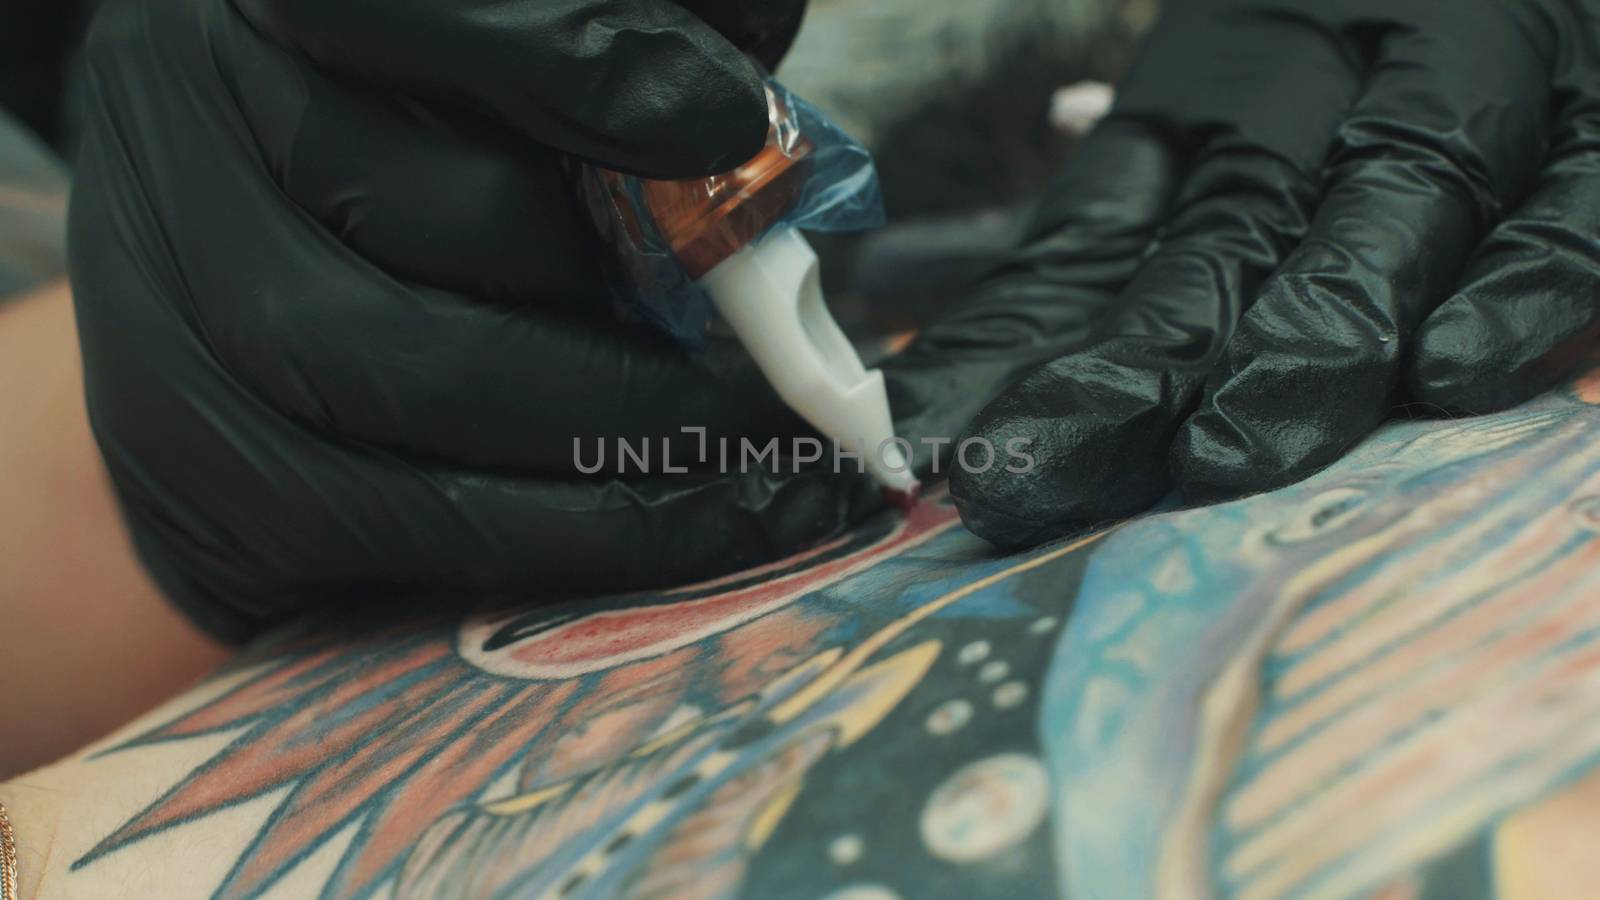 Master tattooist holding a tattoo machine making a tattoo on the girl's back. Close up